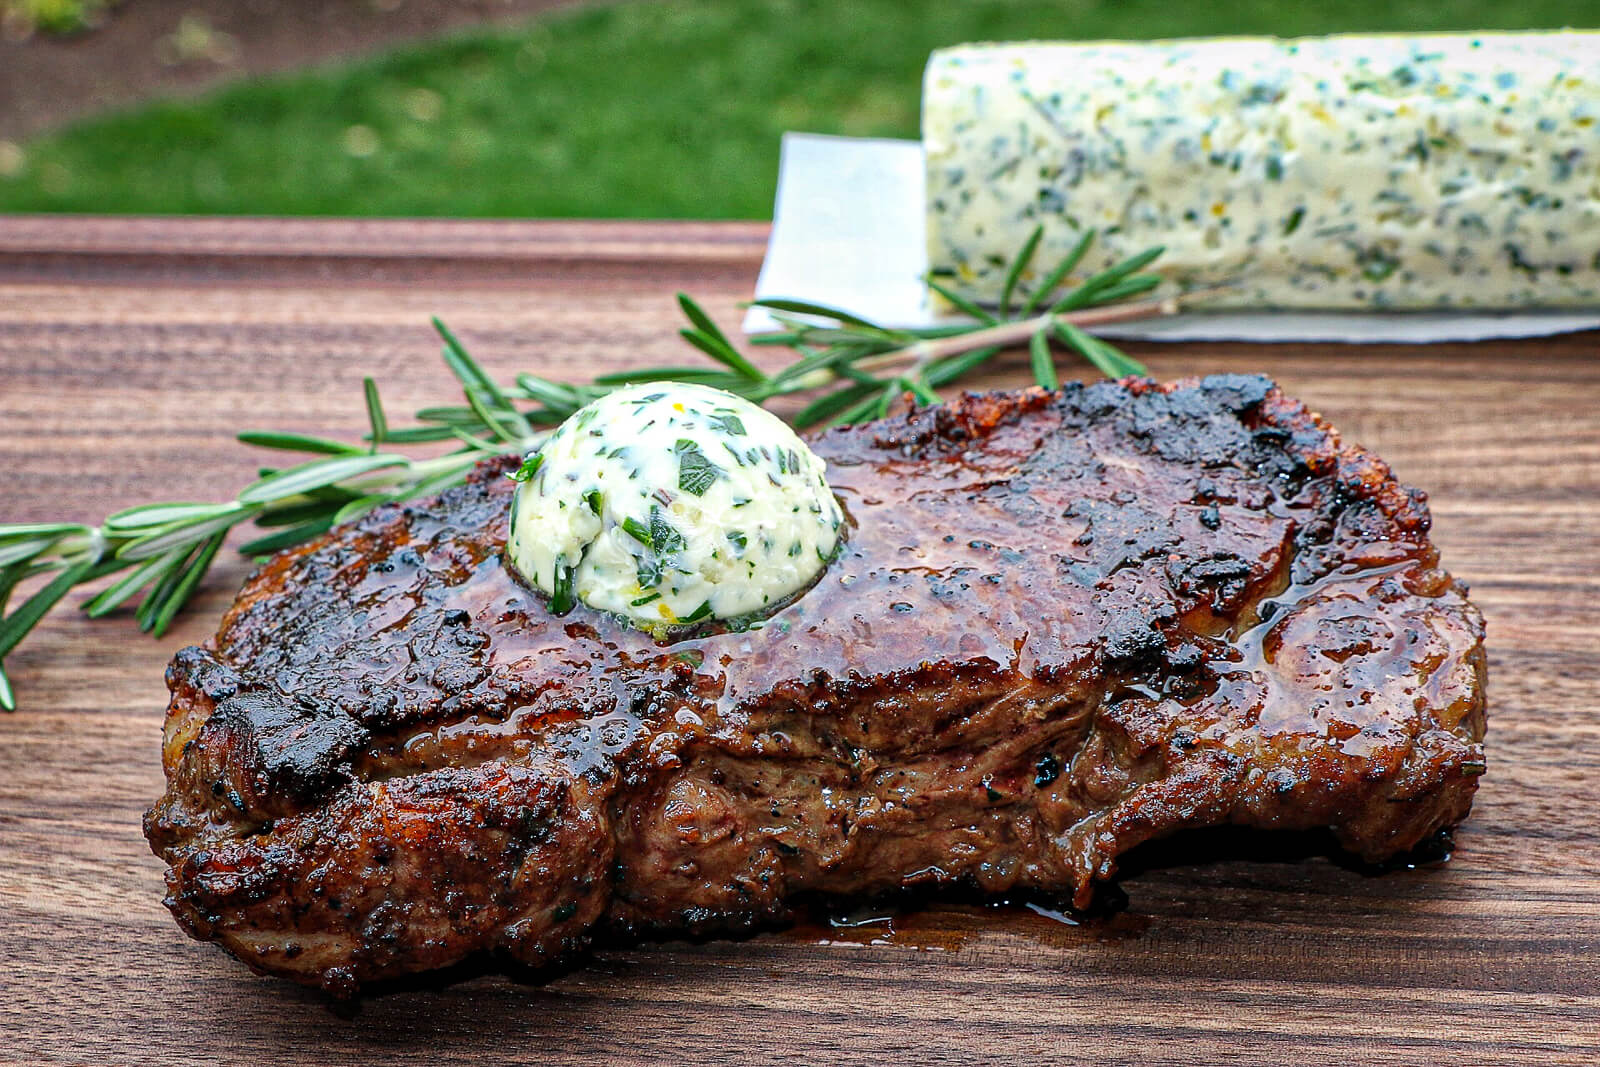 https://www.grillseeker.com/wp-content/uploads/2018/05/compound-herb-butter-for-steak-on-nystrip-steak.jpg